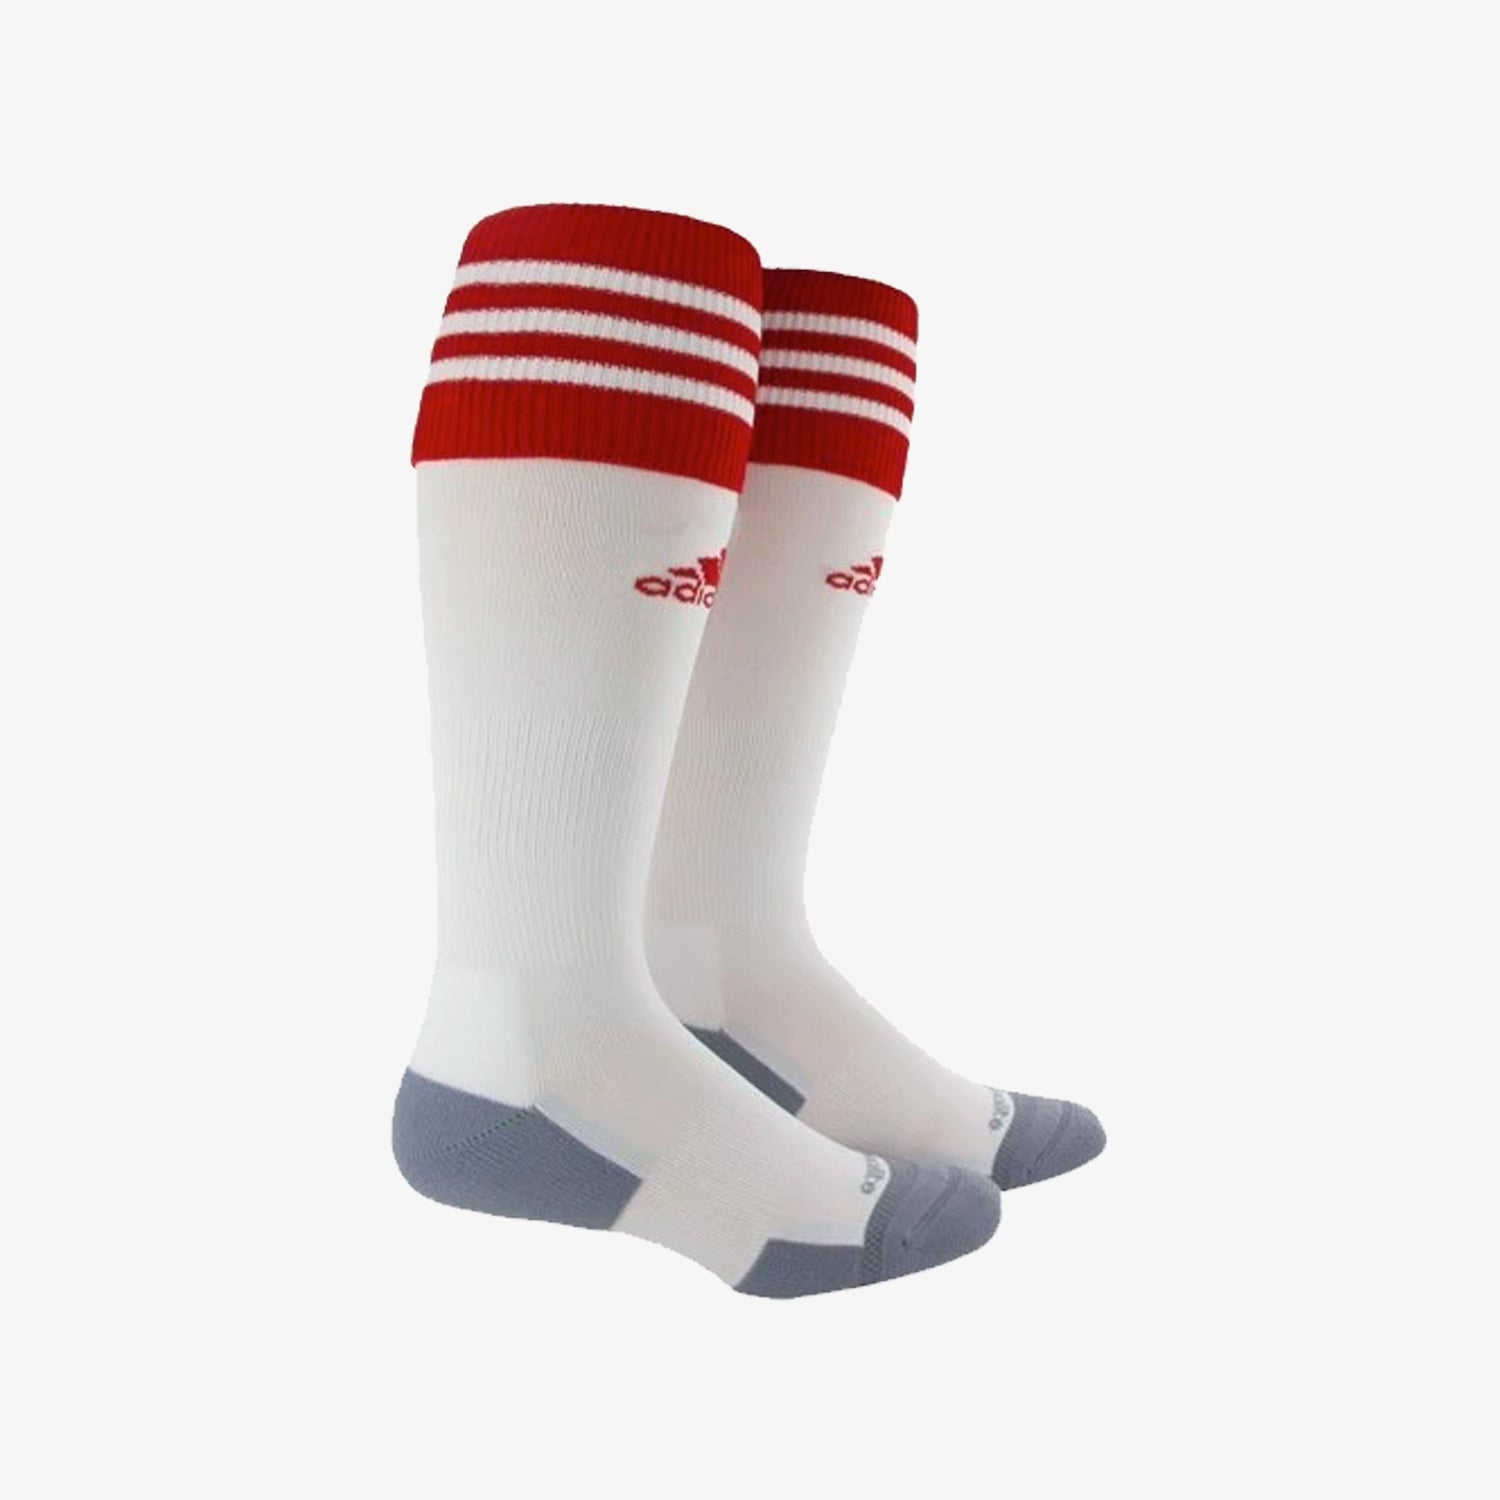 Copa Zone Cushion 2.0 Soccer Socks Small - White/Red